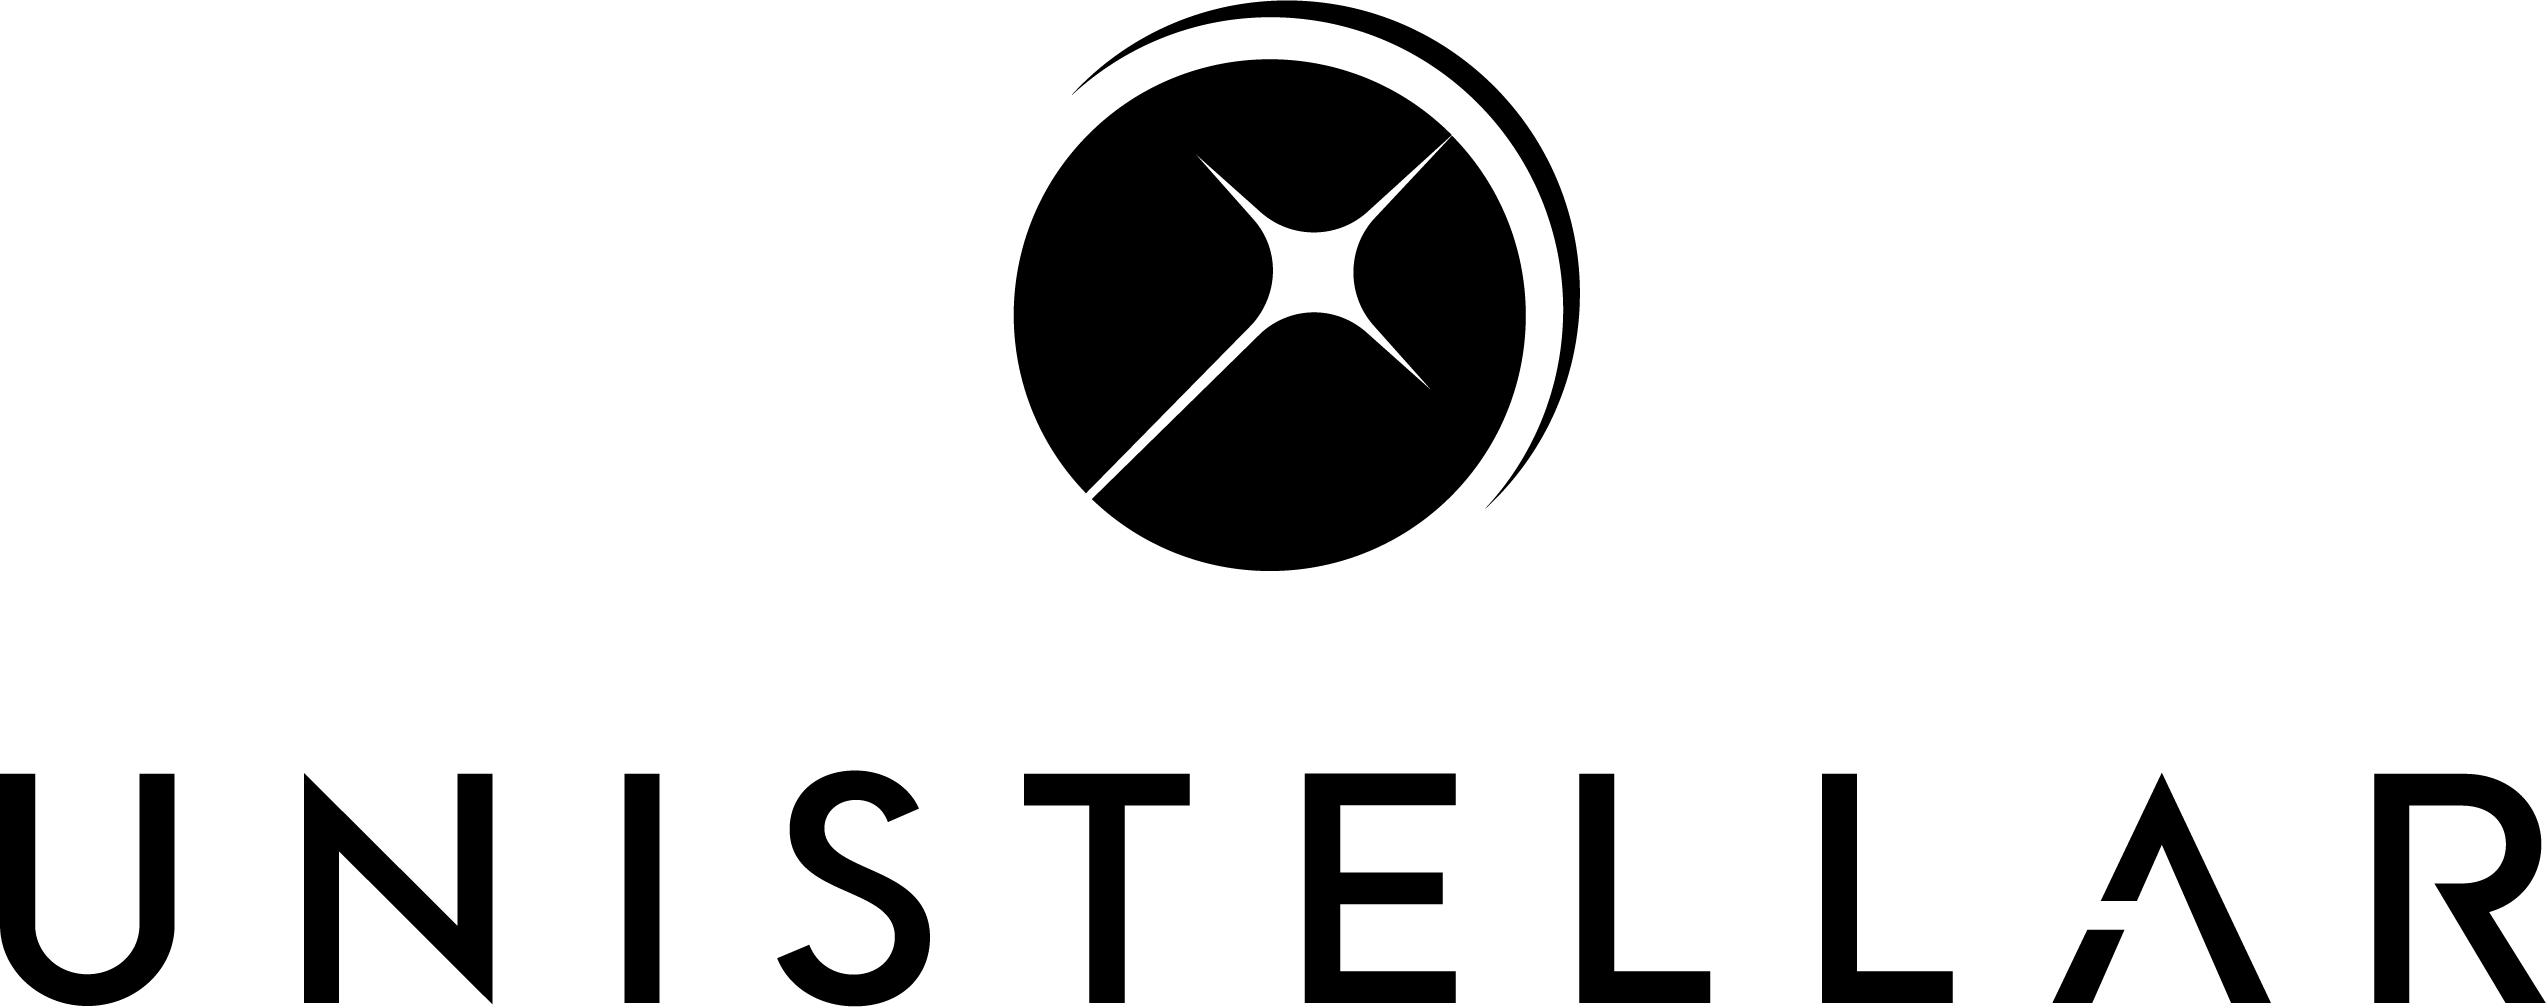 Unistellar Logo Centre BLACK 1